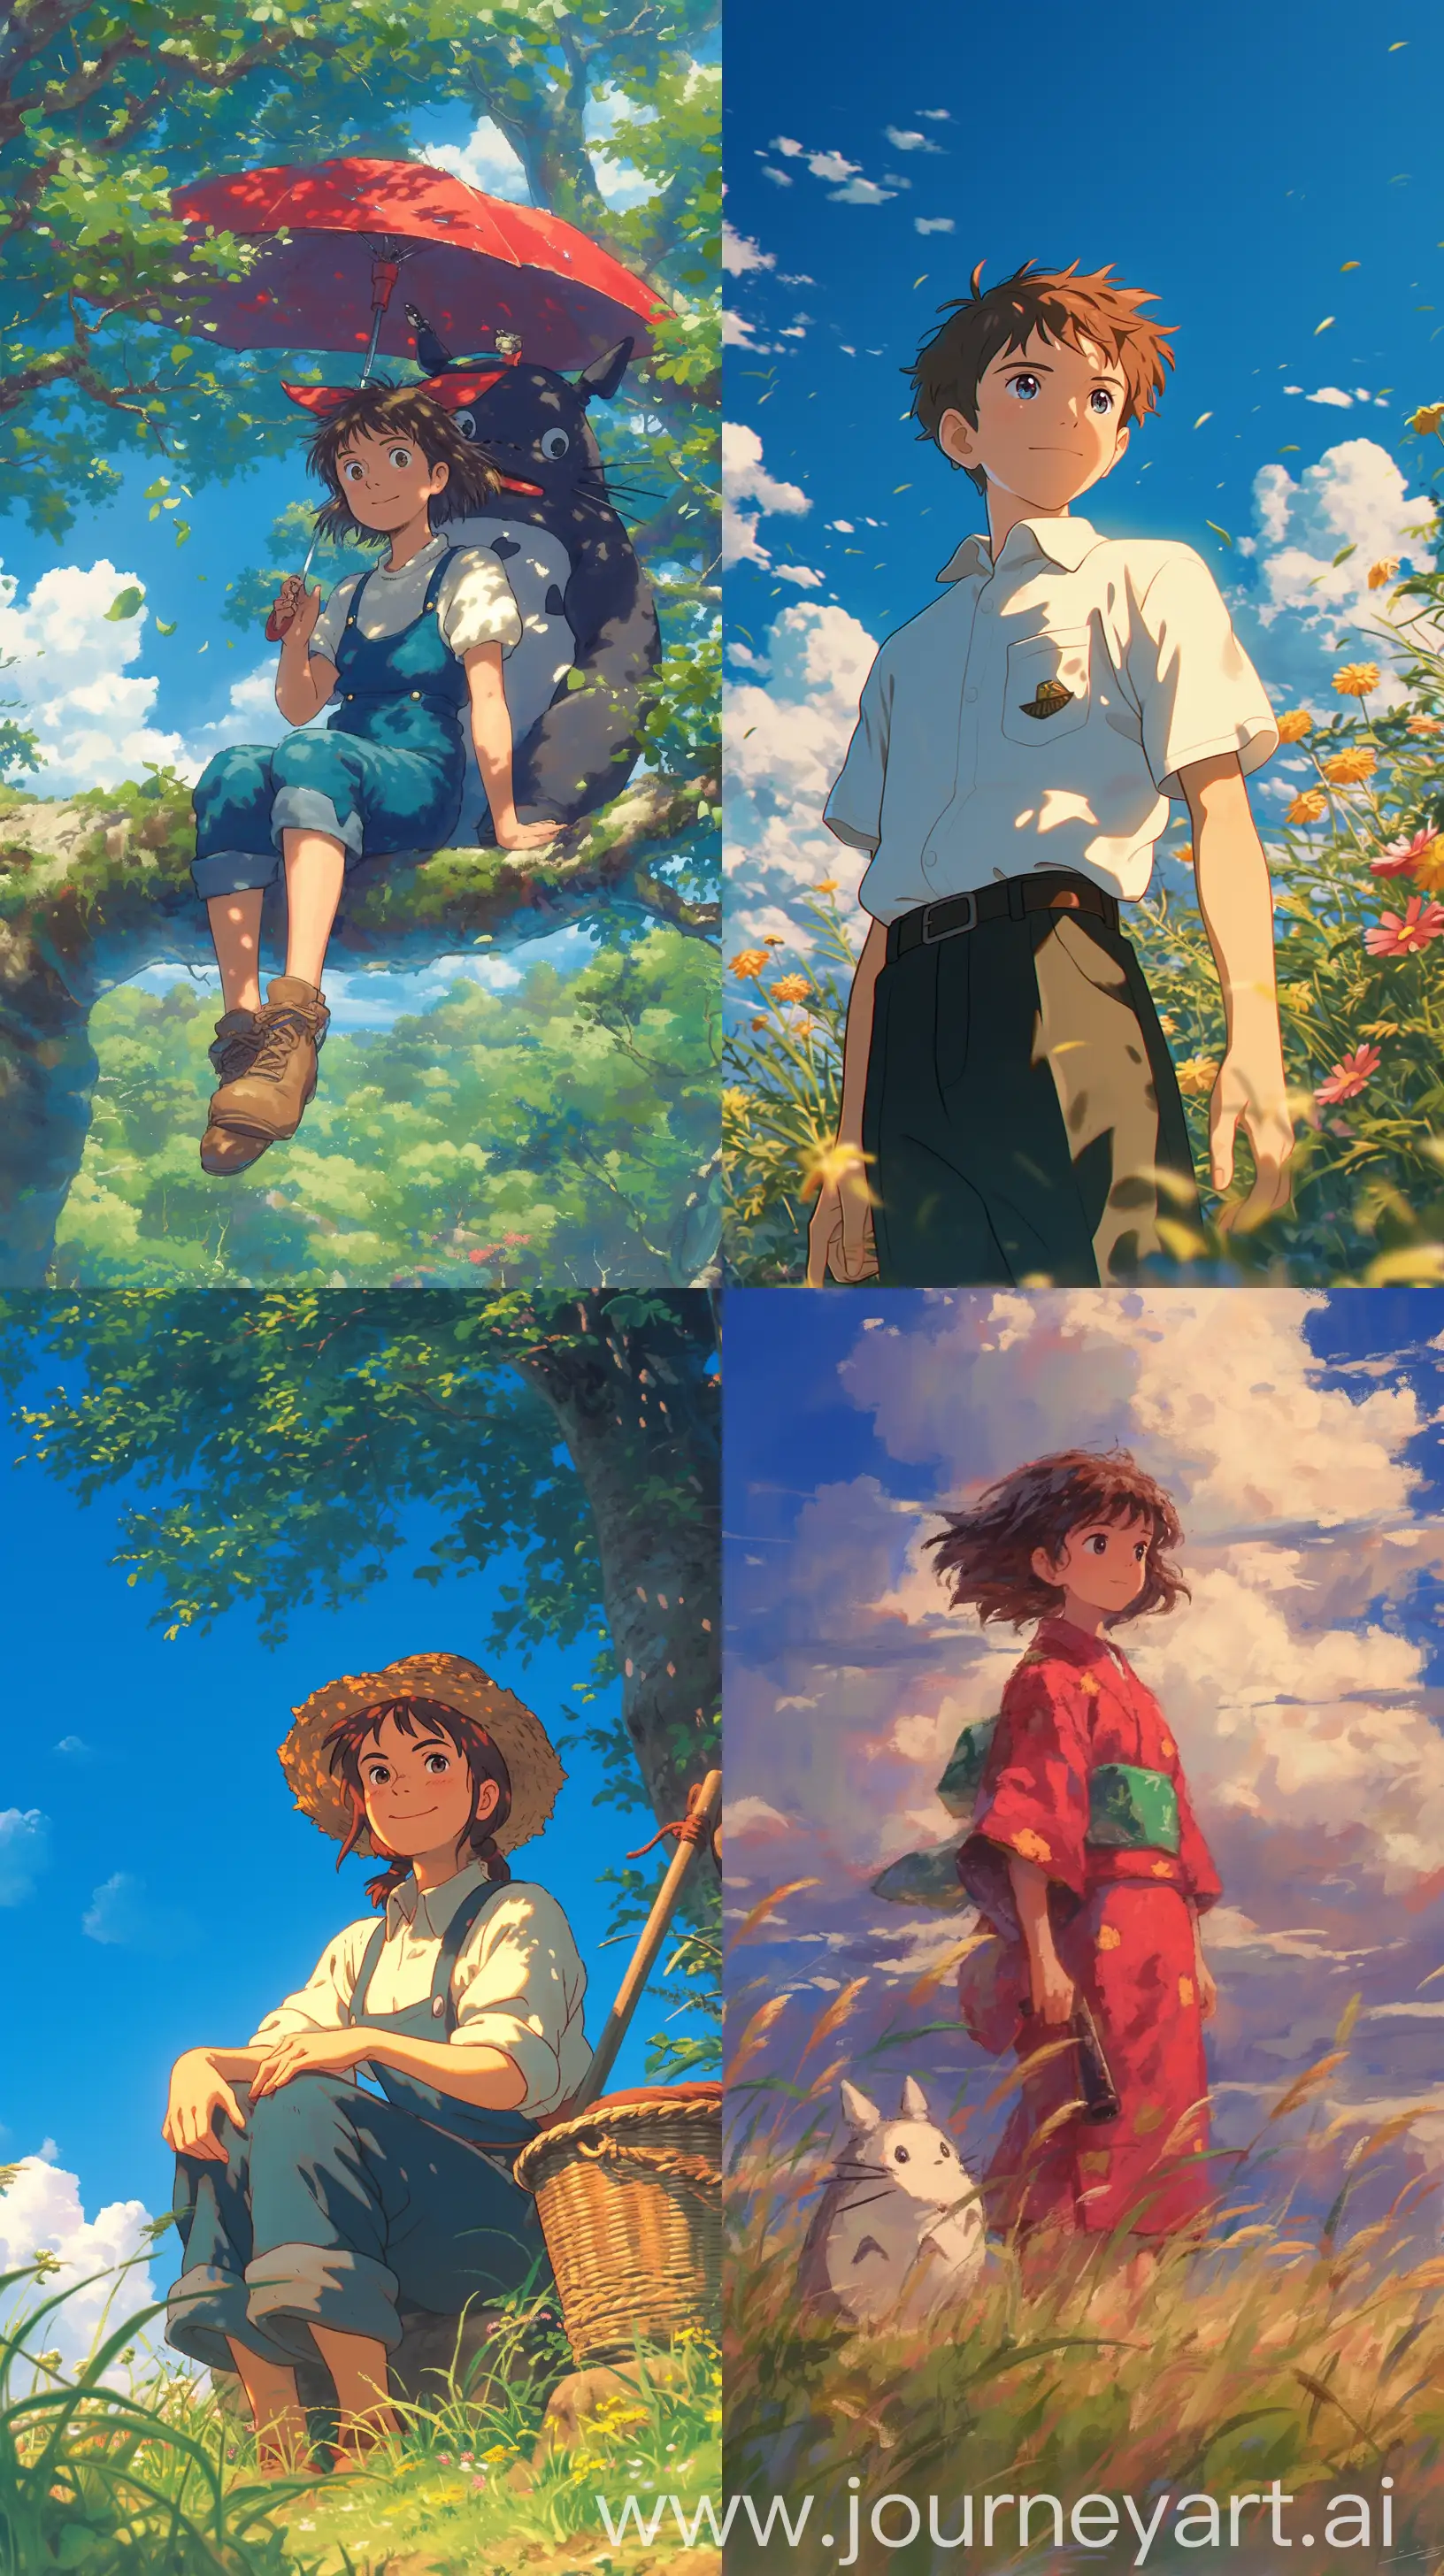 Cinematic-Studio-Ghibli-Masterpiece-AwardWinning-HighResolution-Animated-Scene